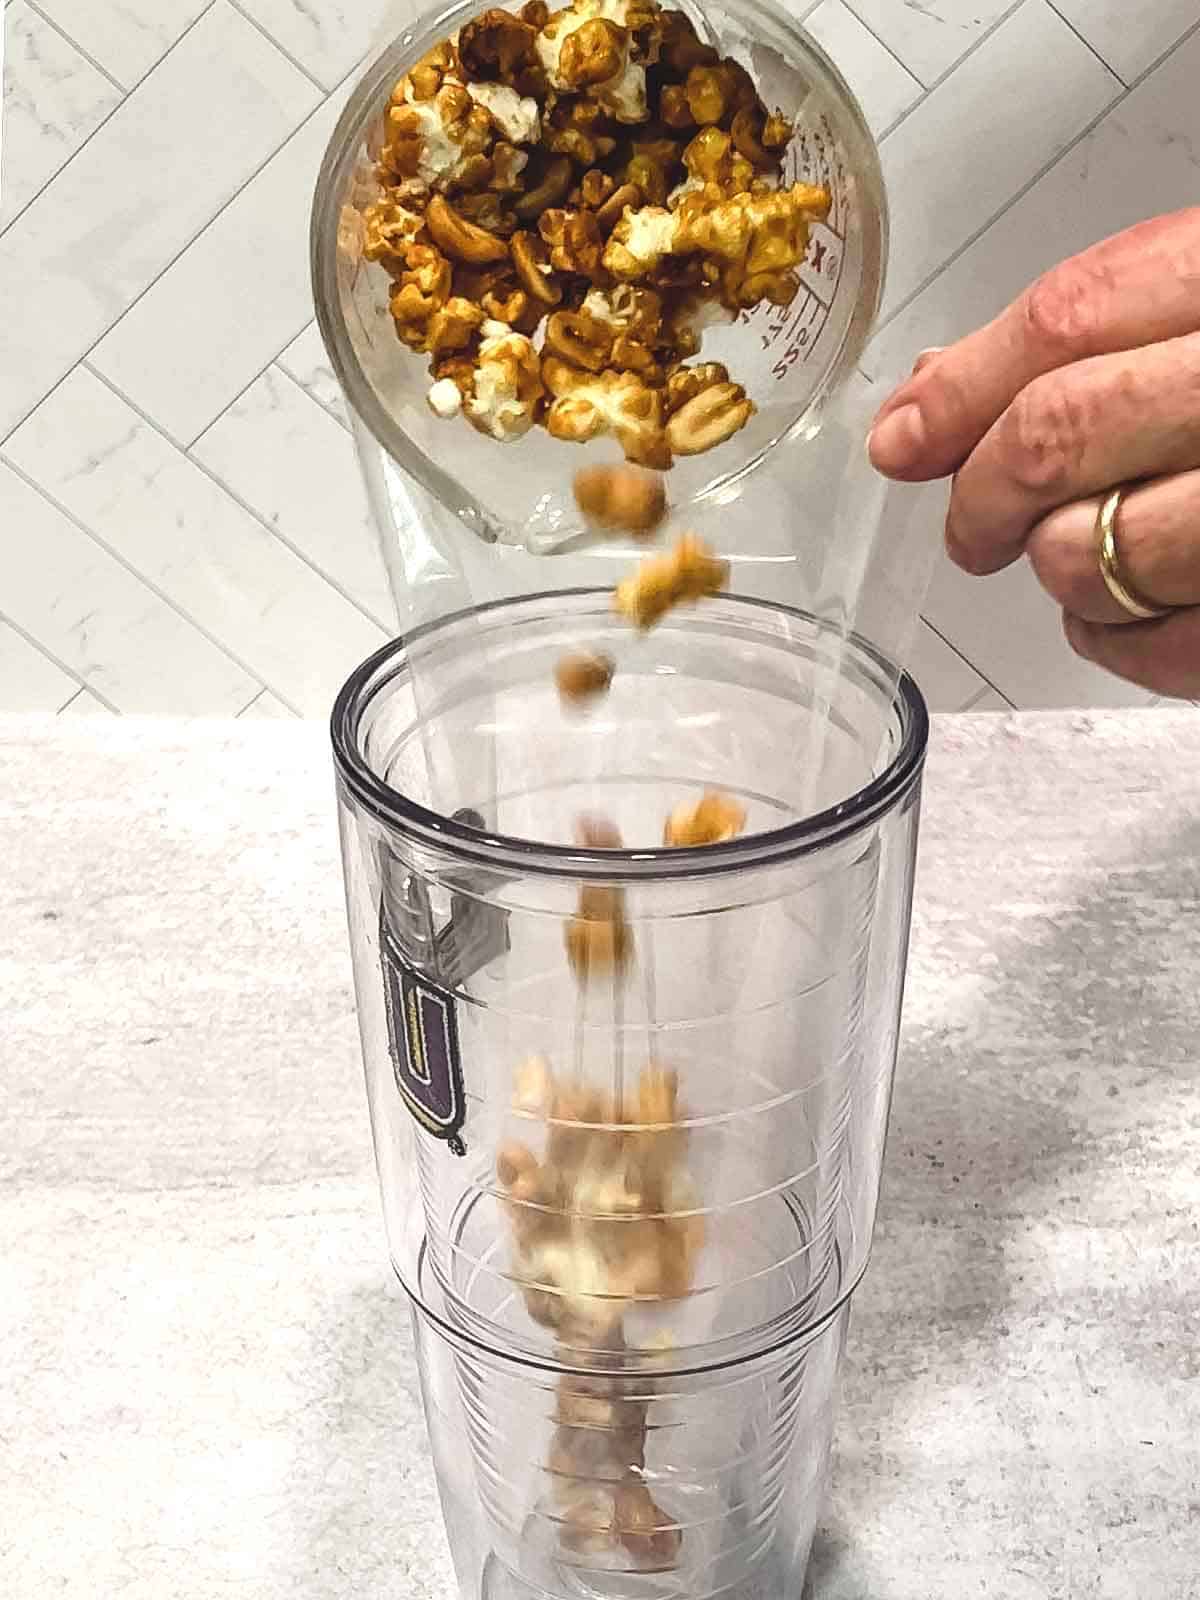 Adding the caramel corn to cone-shaped treat bag.